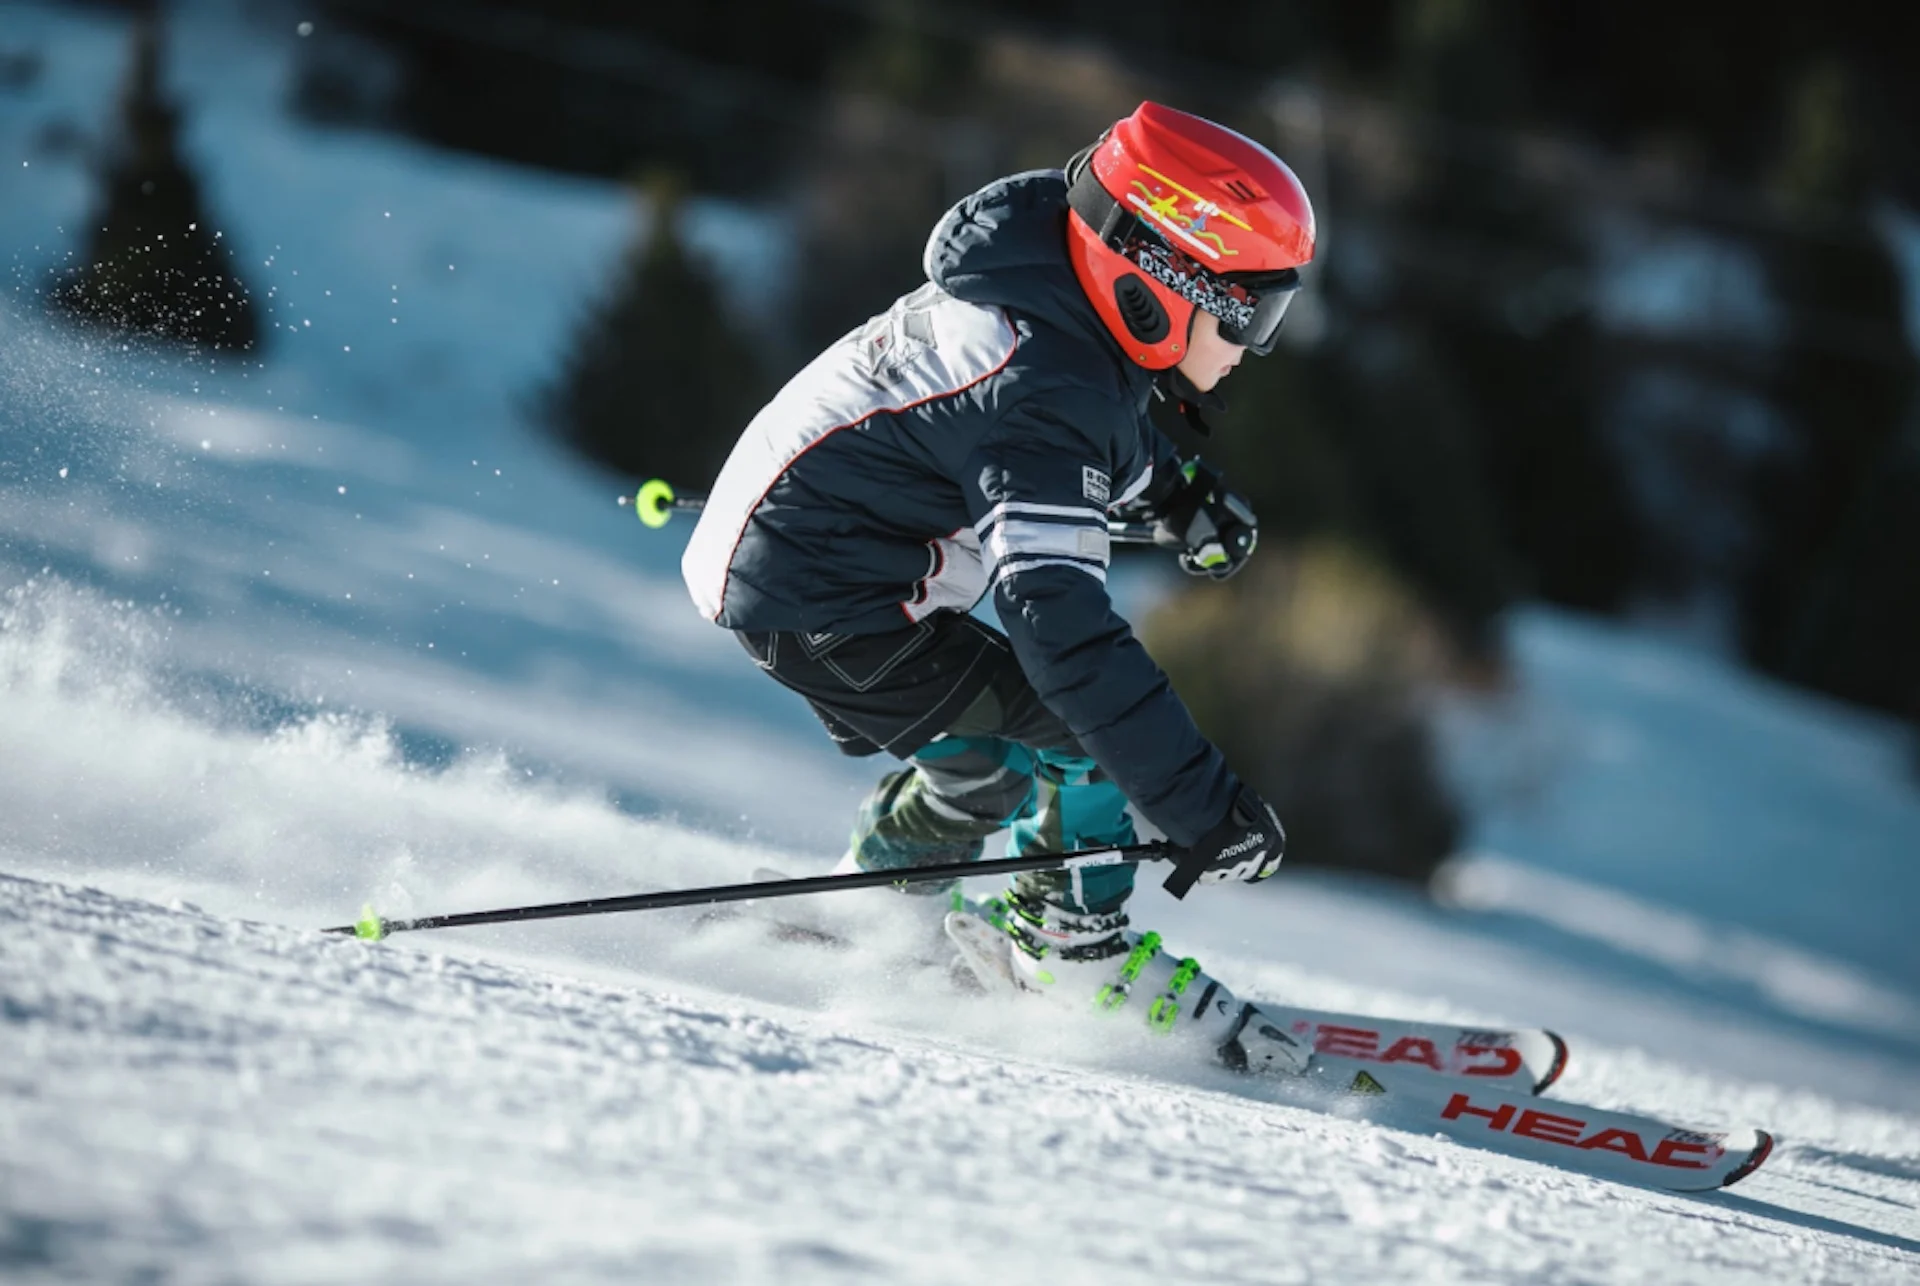 Ski season in the age of COVID: Canada makes adjustments